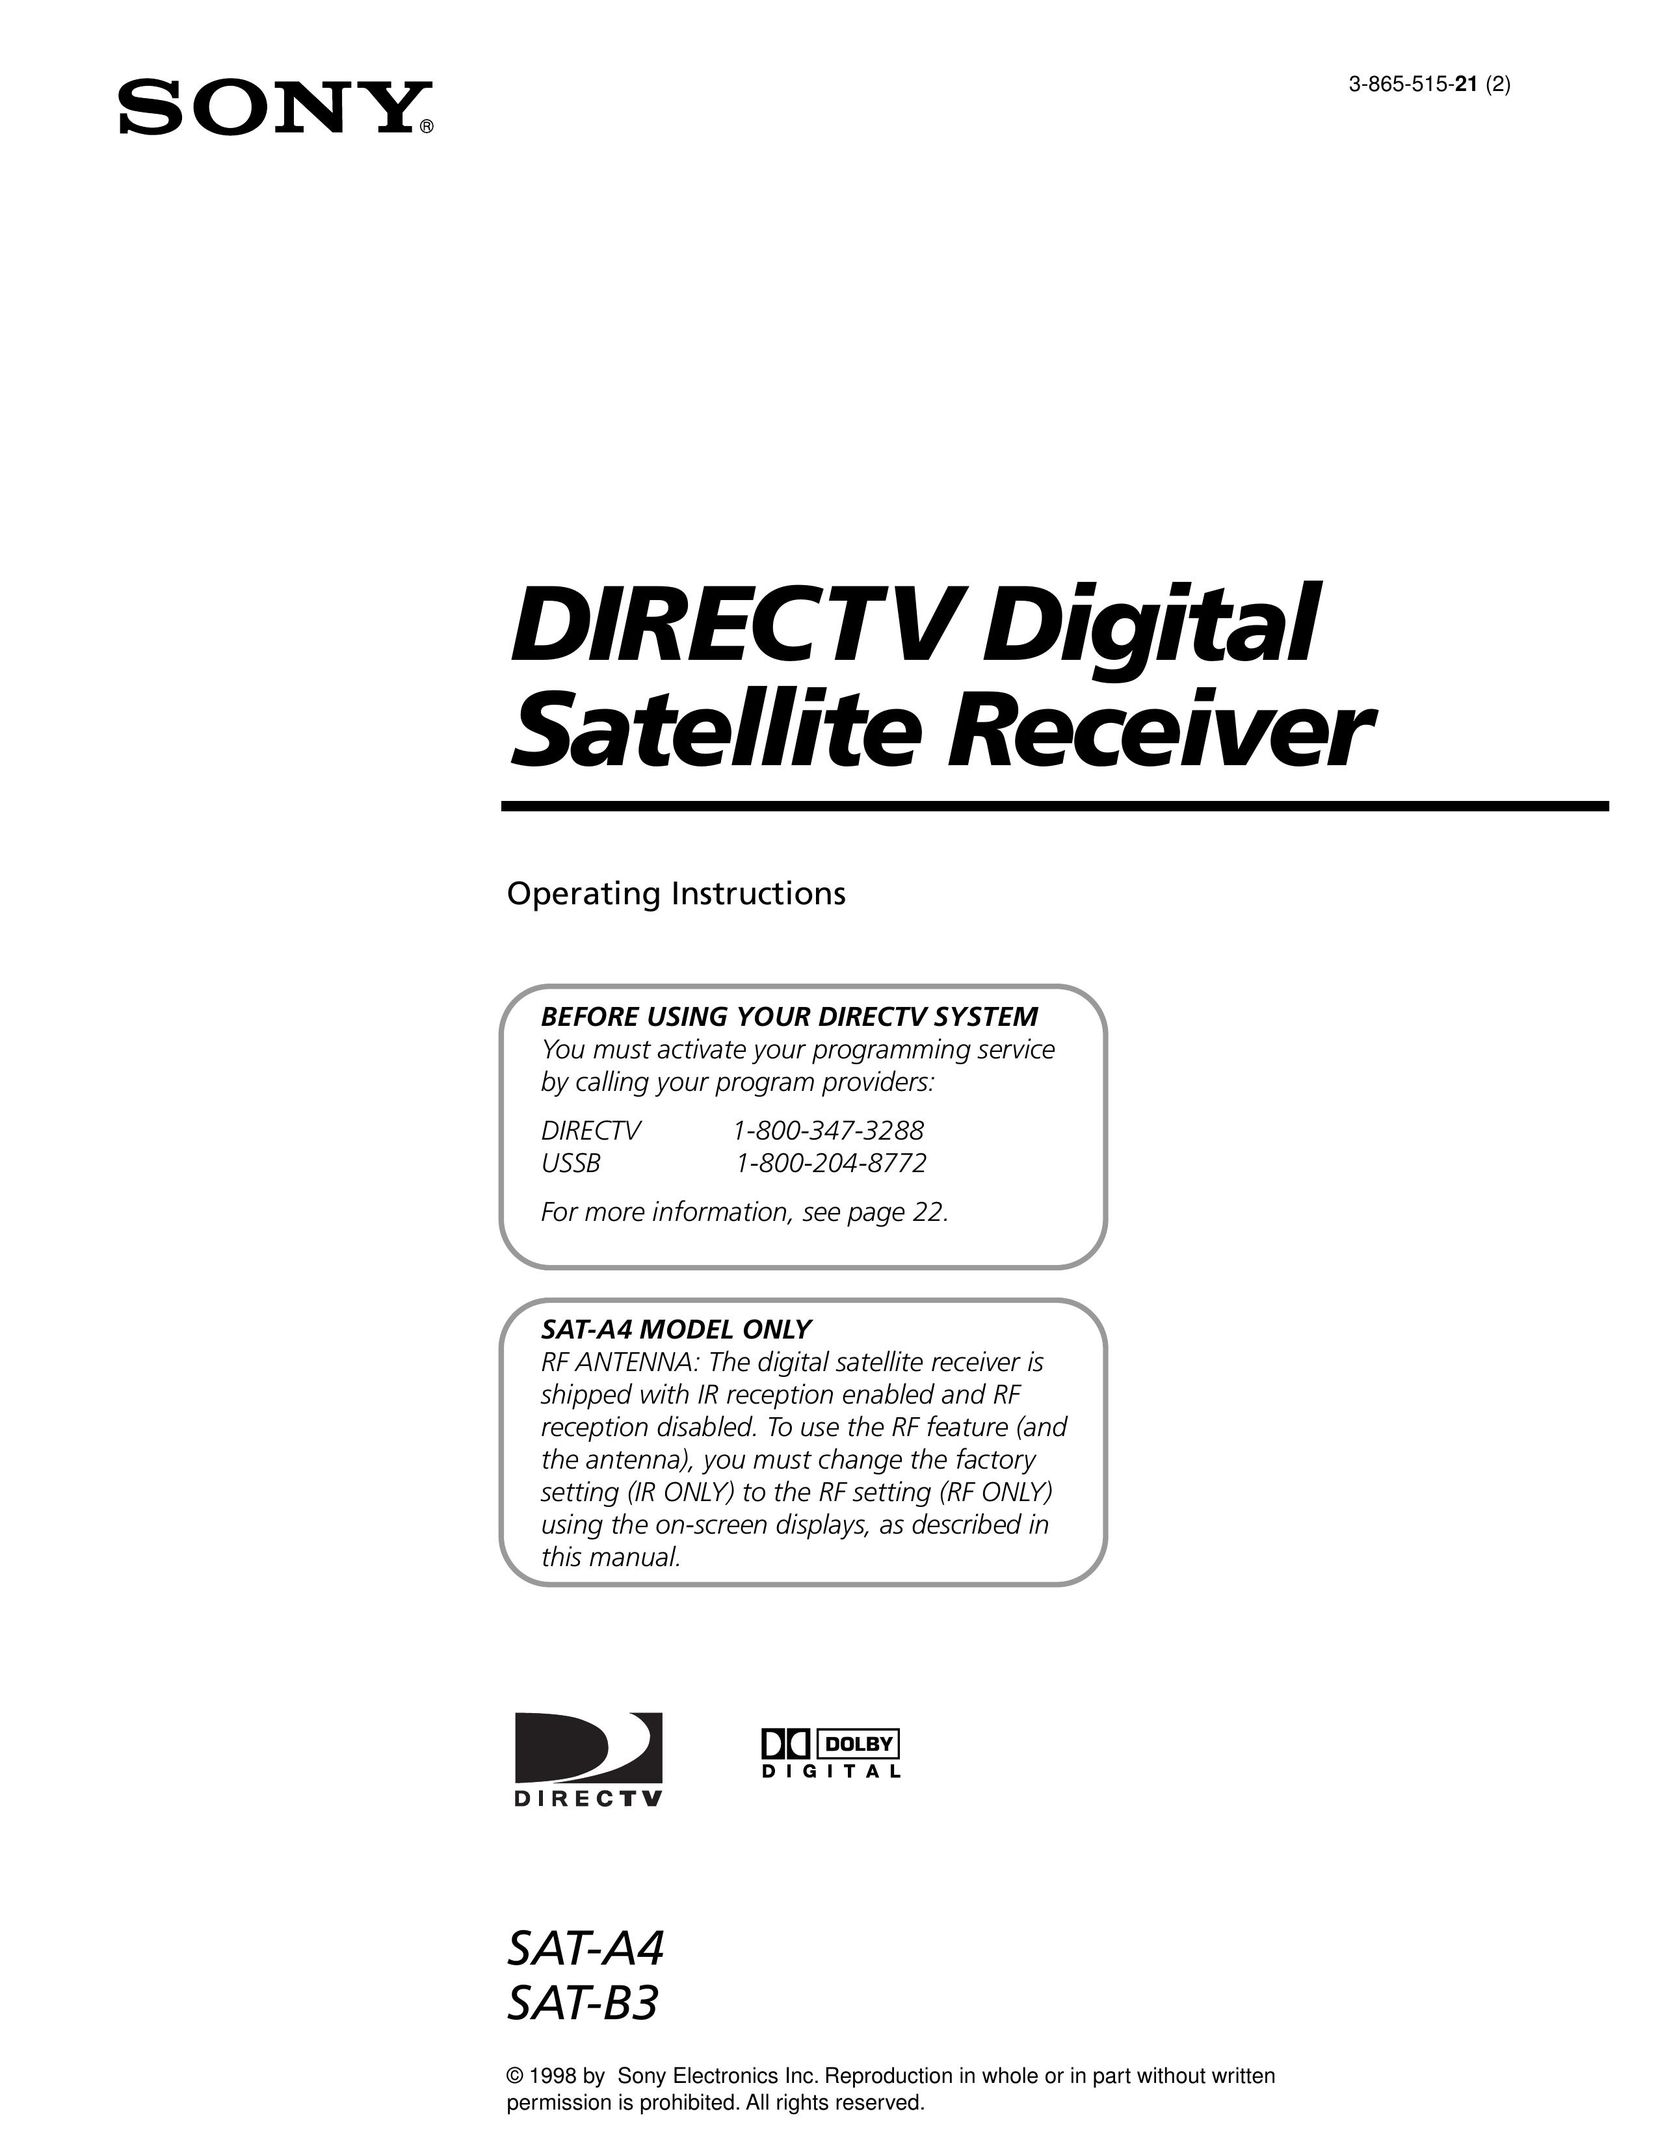 Sony SAT-A4 Satellite TV System User Manual